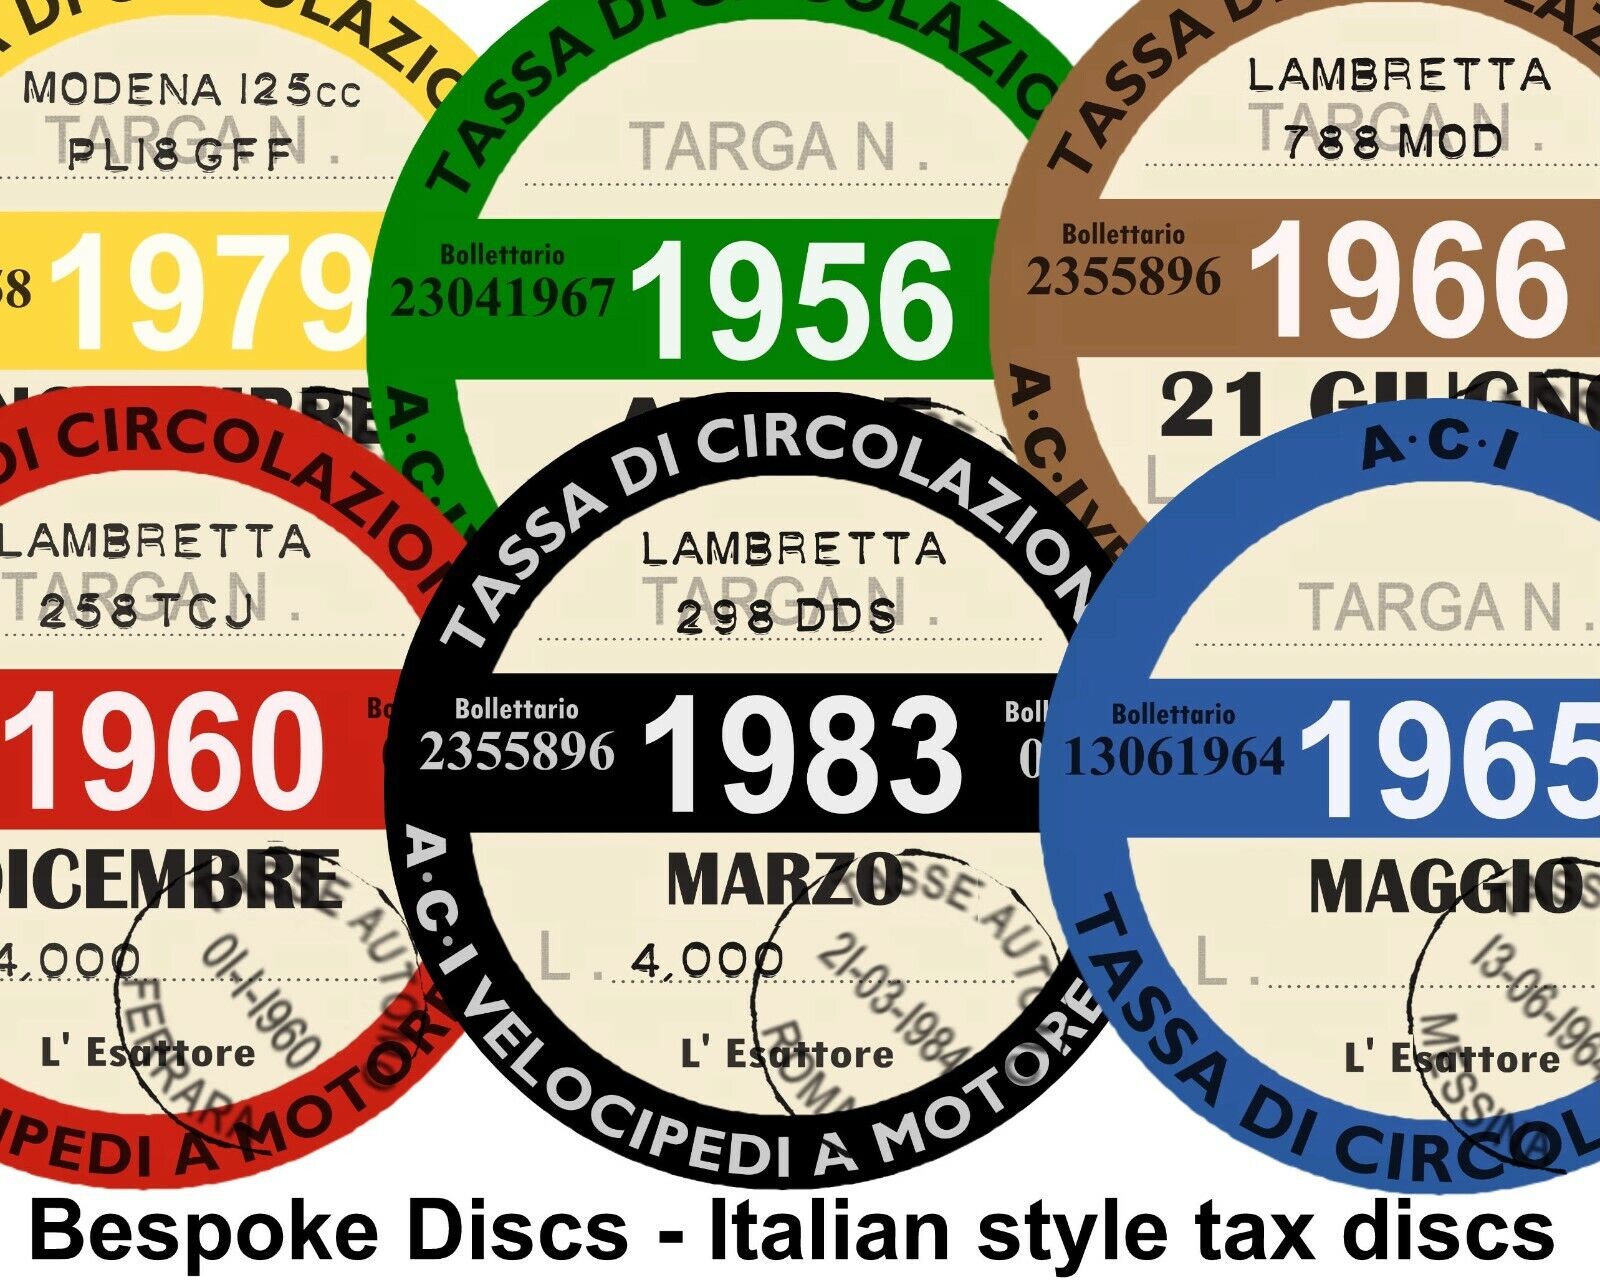 Replica / Reproduction Vintage Italian Tax Disc Lambretta Vespa - Mod  Bespoke